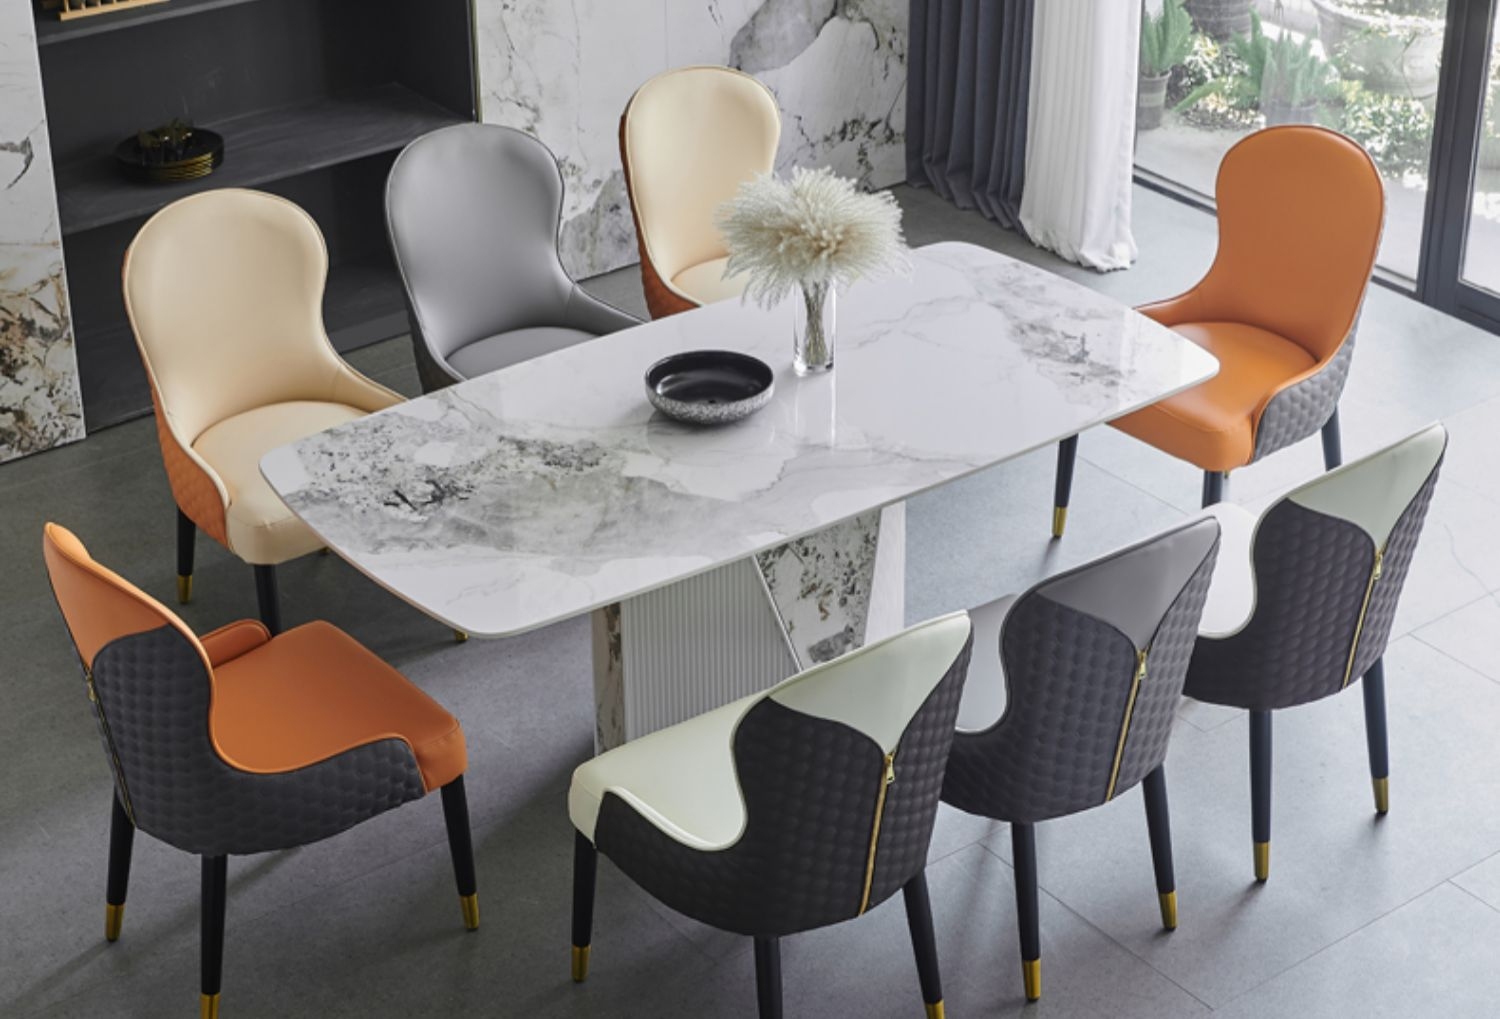 Europe Stainless steel legs modern luxury dining chair zipper design